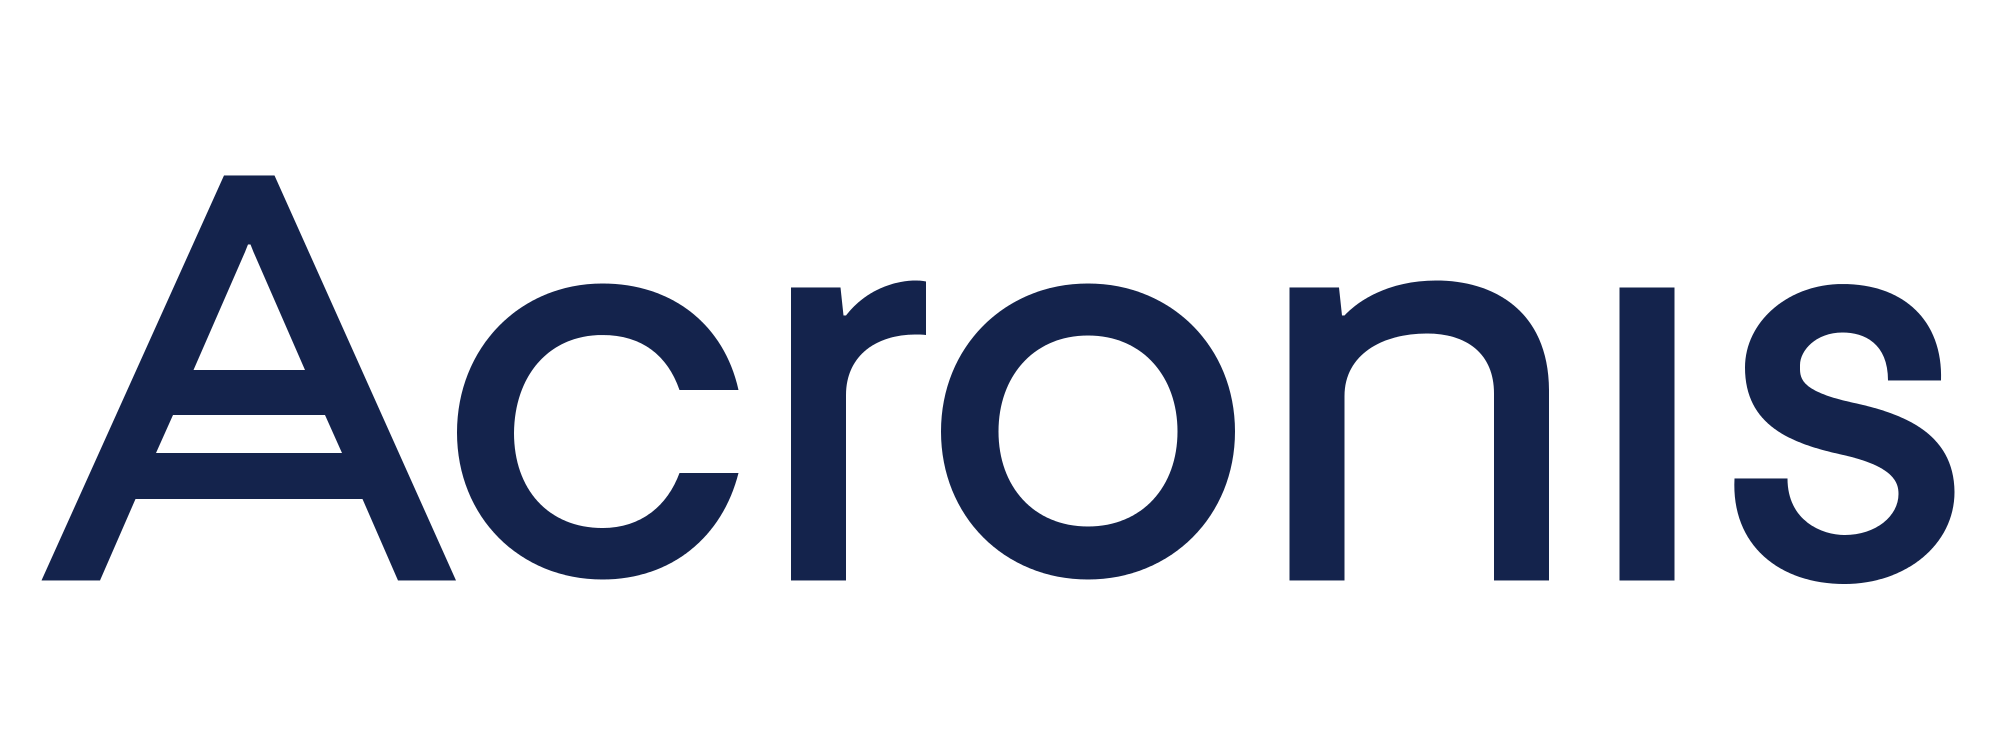 Acronis Logo - File:Acronis.svg - Wikimedia Commons